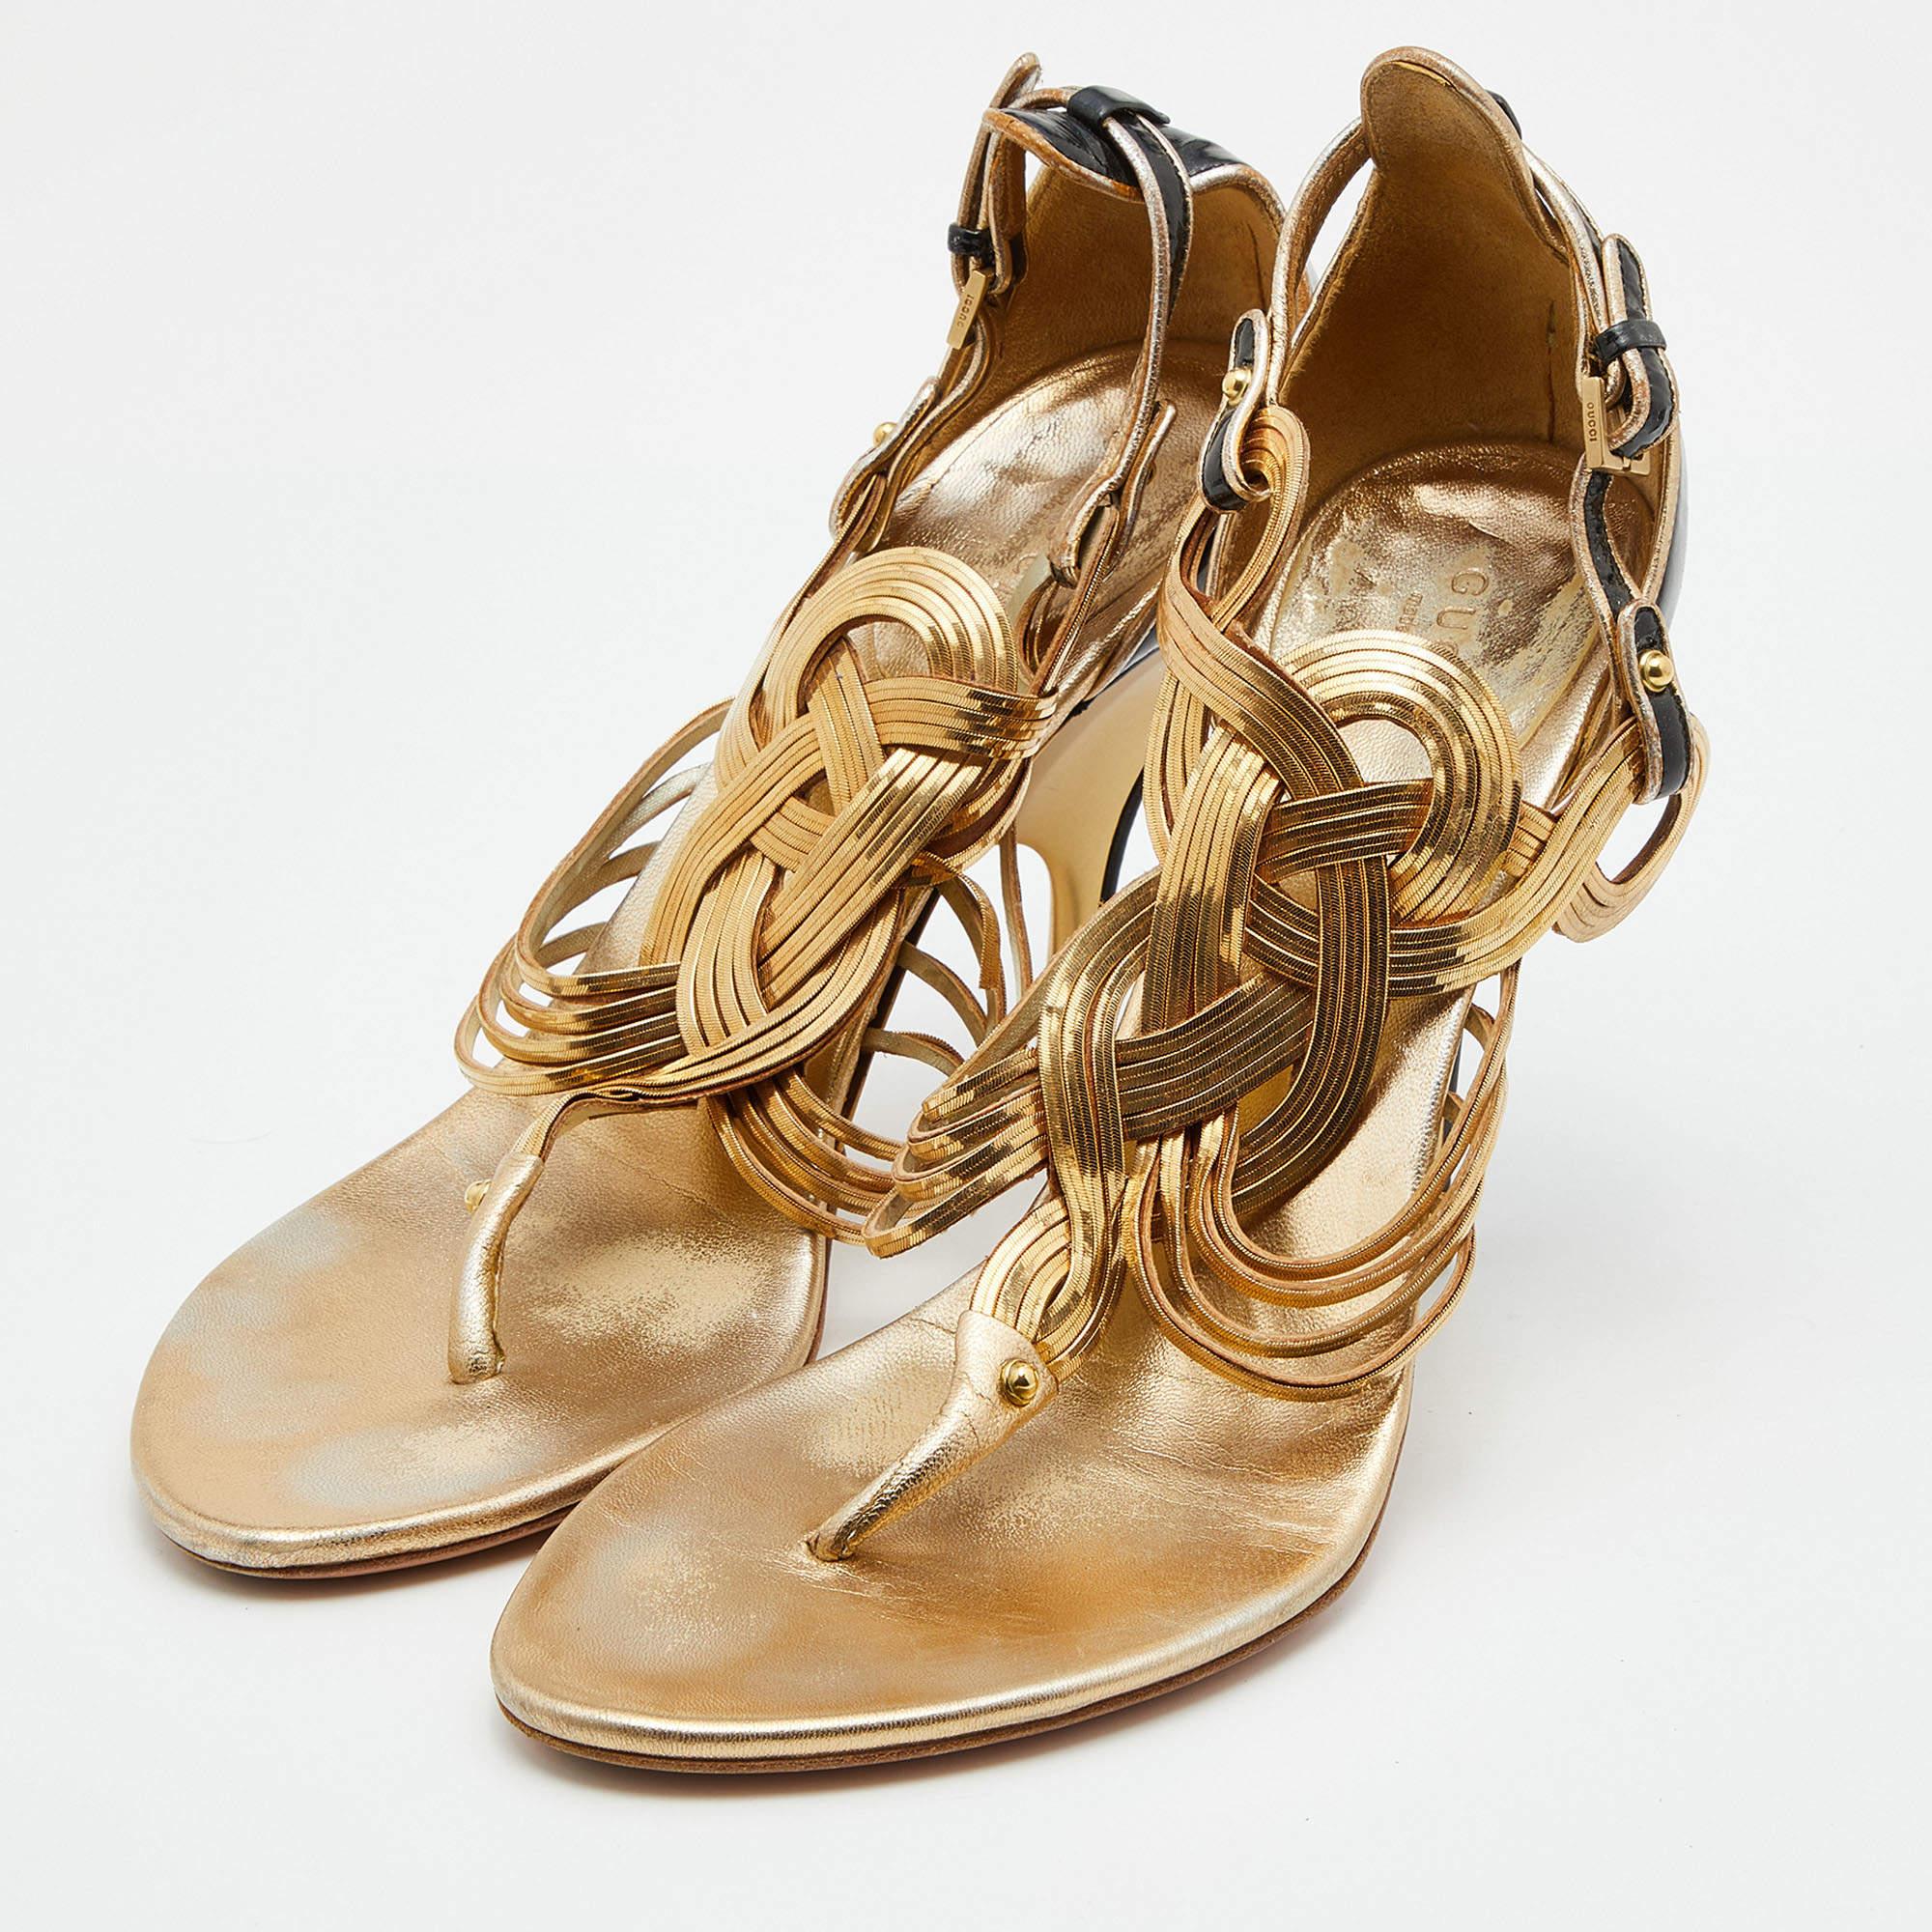 Gucci Metallic Gold/Black Leather Chain Occasion Ankle Strap Sandals Size 38 In Good Condition For Sale In Dubai, Al Qouz 2